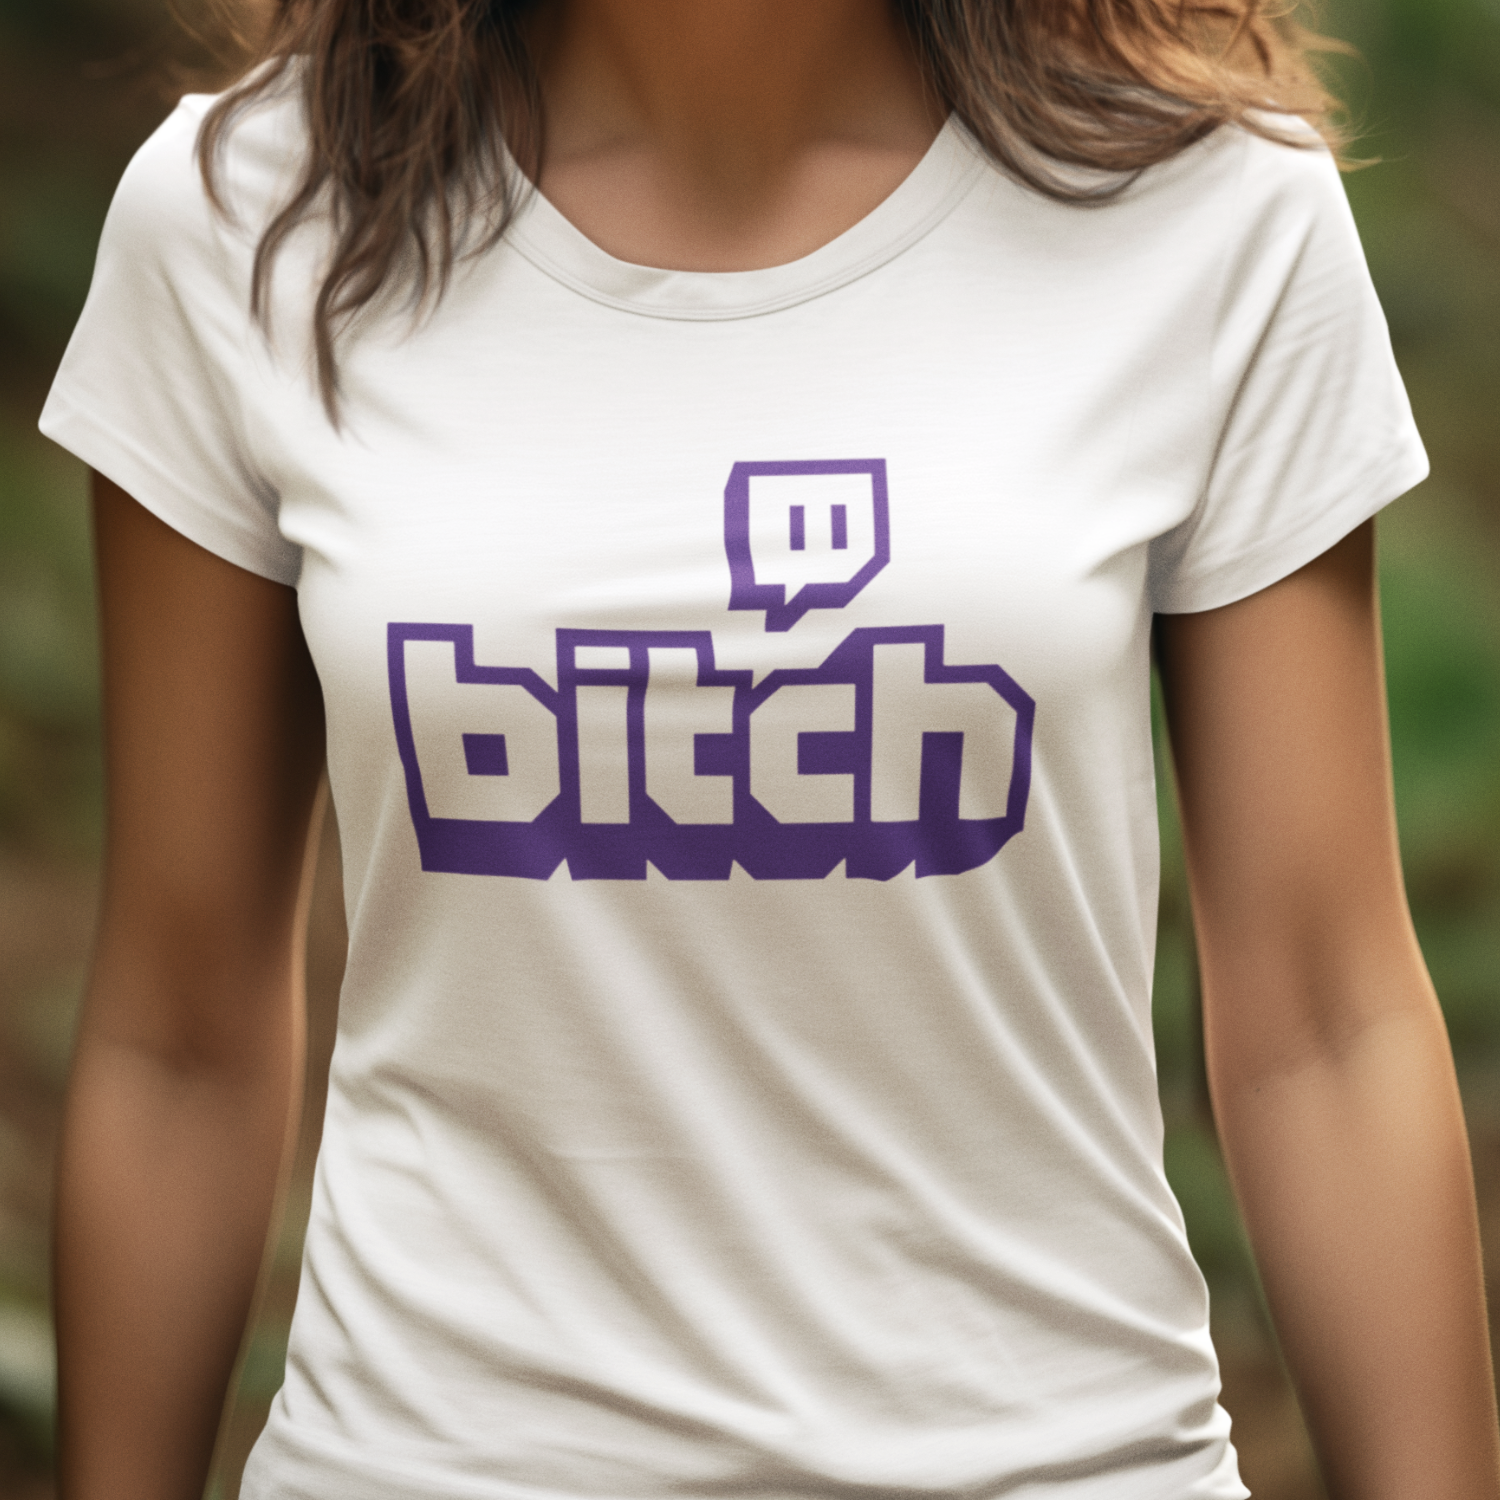 Bitch T Shirt